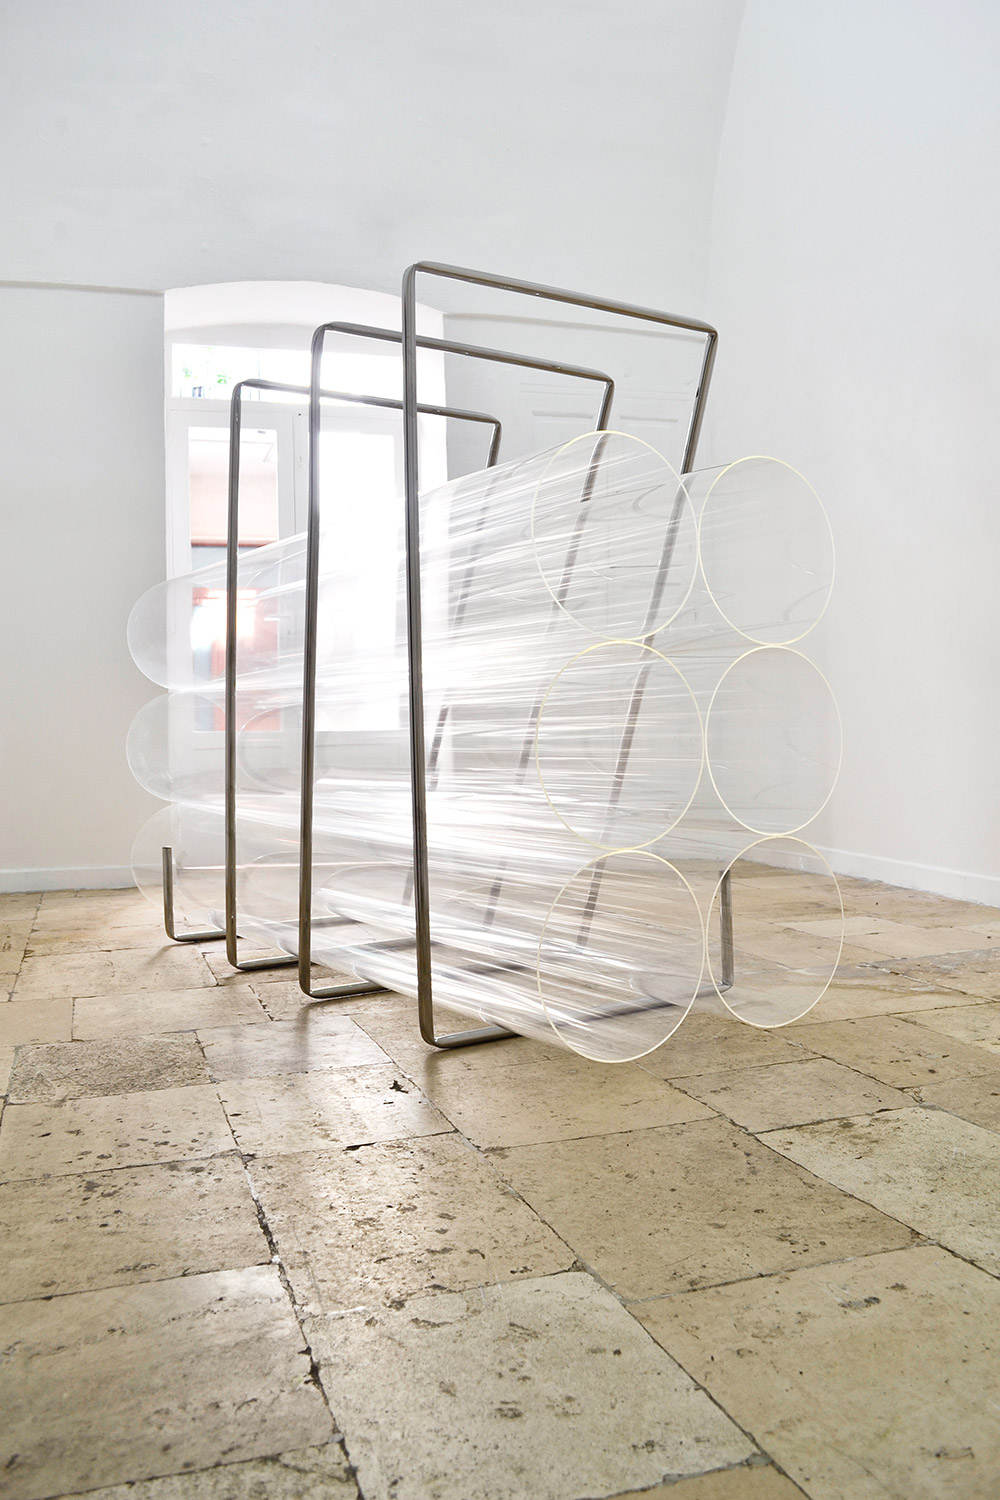 Antonio Trotta, Paquete especial, 1966-2016, steel, plexiglass, 330x145x110 cm